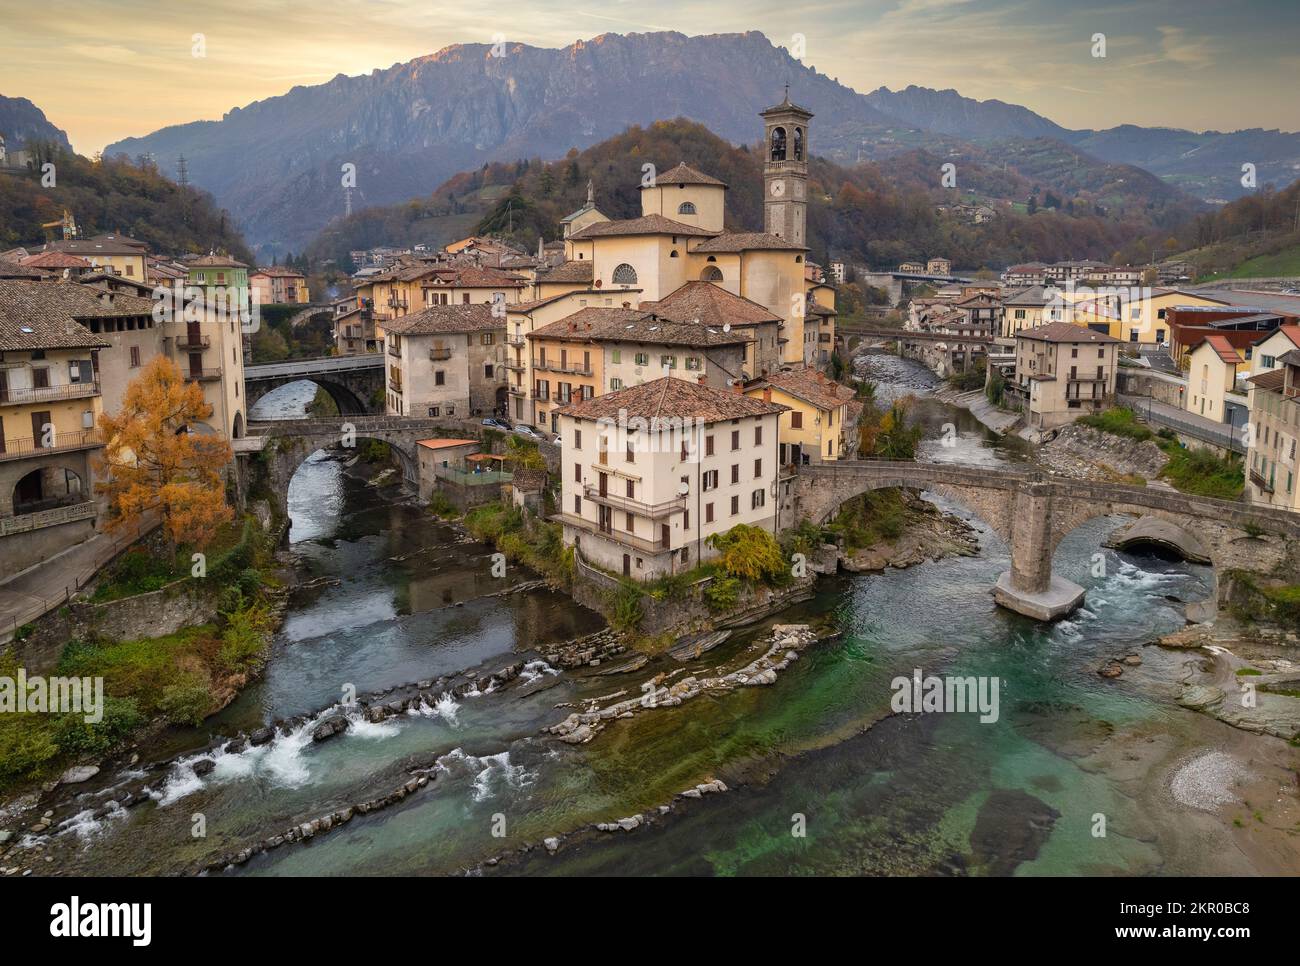 Aerial villagescape with mountain backdrop, San Giovanni Bianco, Val Brembana, Bergamo, Lombardy, Italy Stock Photo